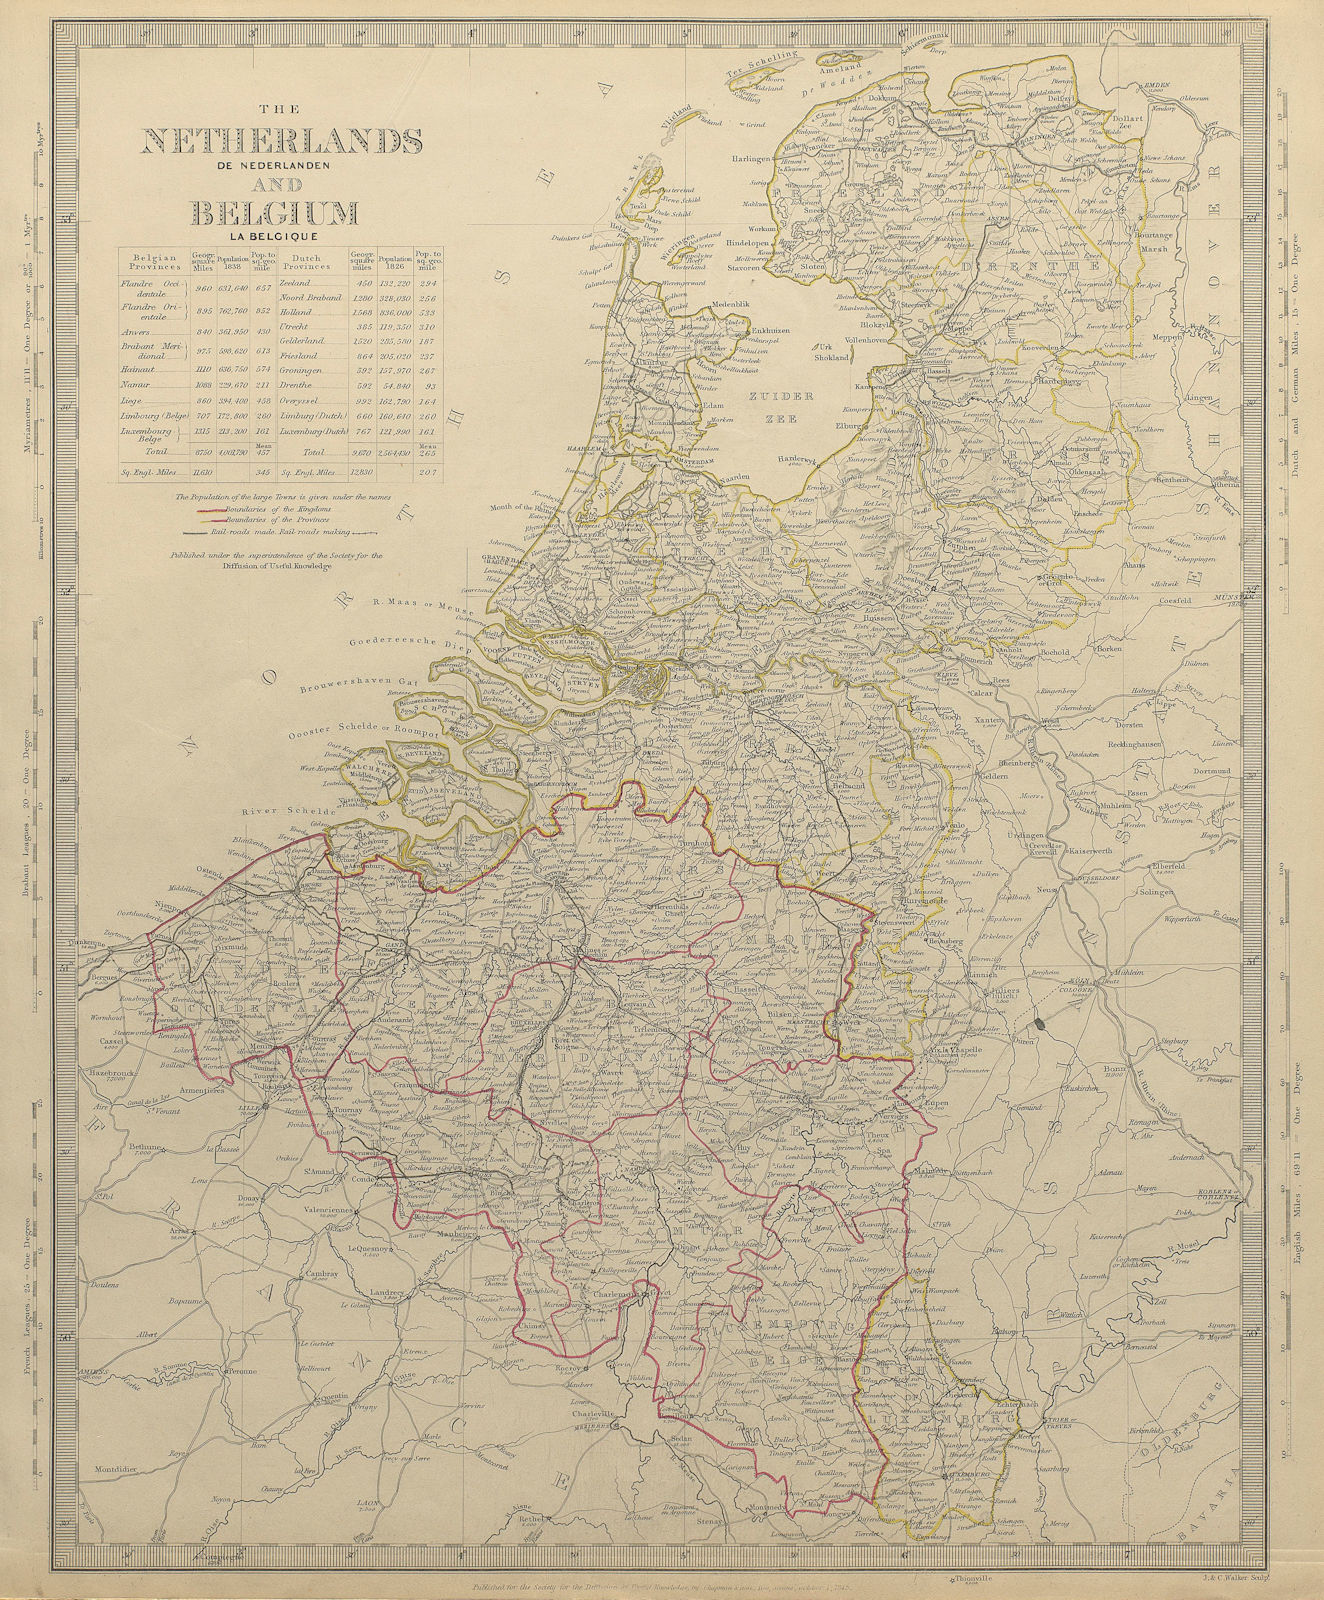 Associate Product NETHERLANDS & BELGIUM w/ railways in use & under construction. SDUK 1844 map